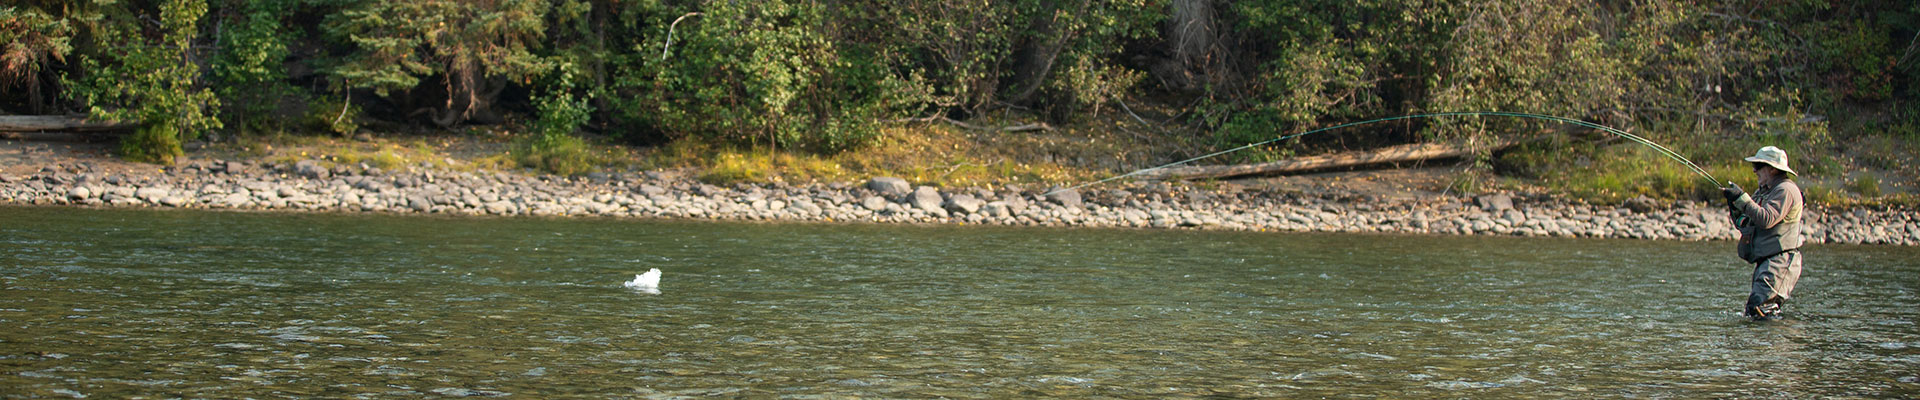 Fishing on the Sustut River